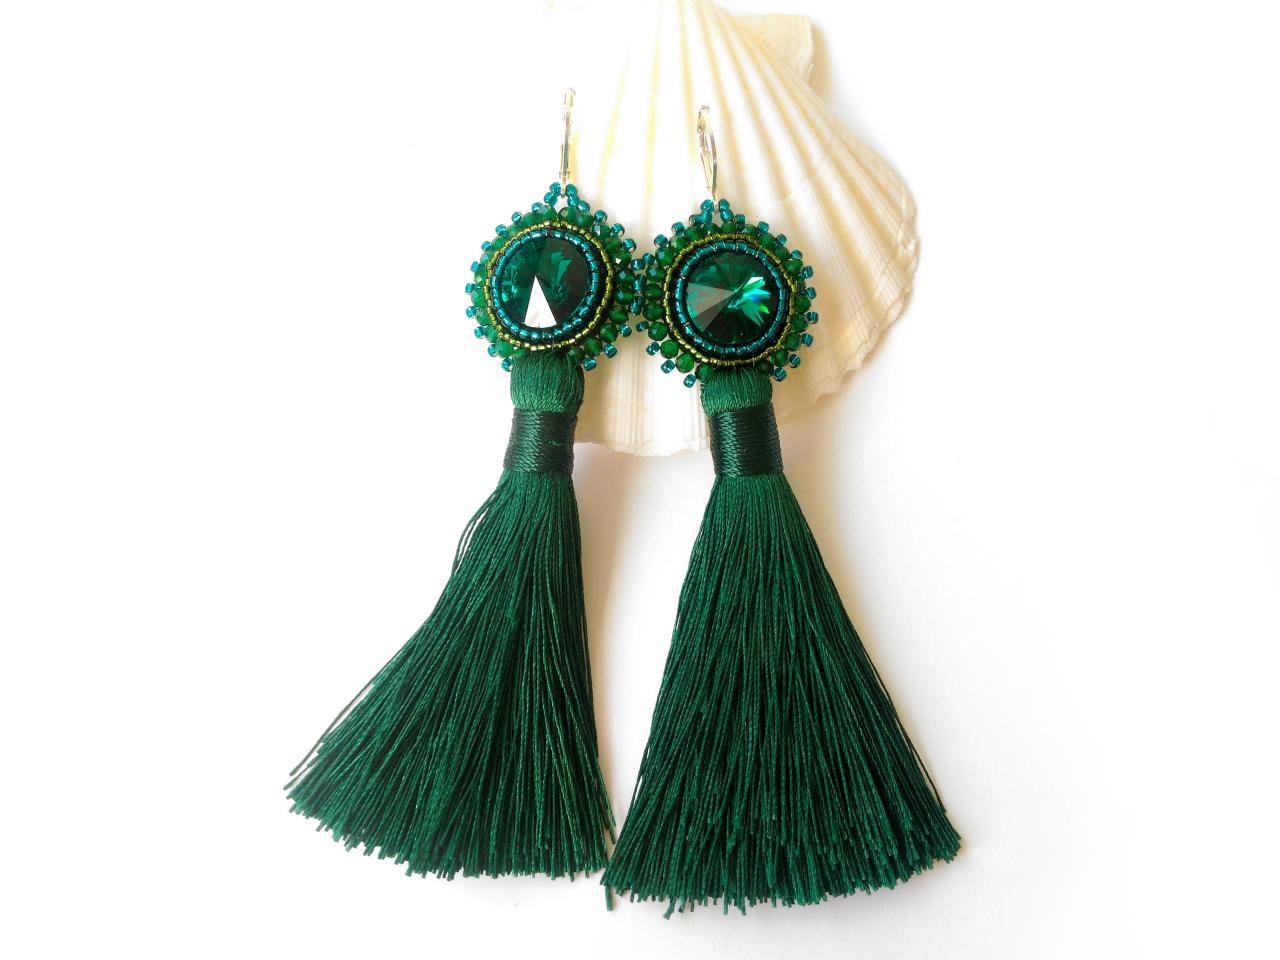 Swarovski Crystals Tassel Earrings, Long Emerald Green Bead Embroidery Earrings, Bohemian Statement Earrings With Swarovski Cabochon